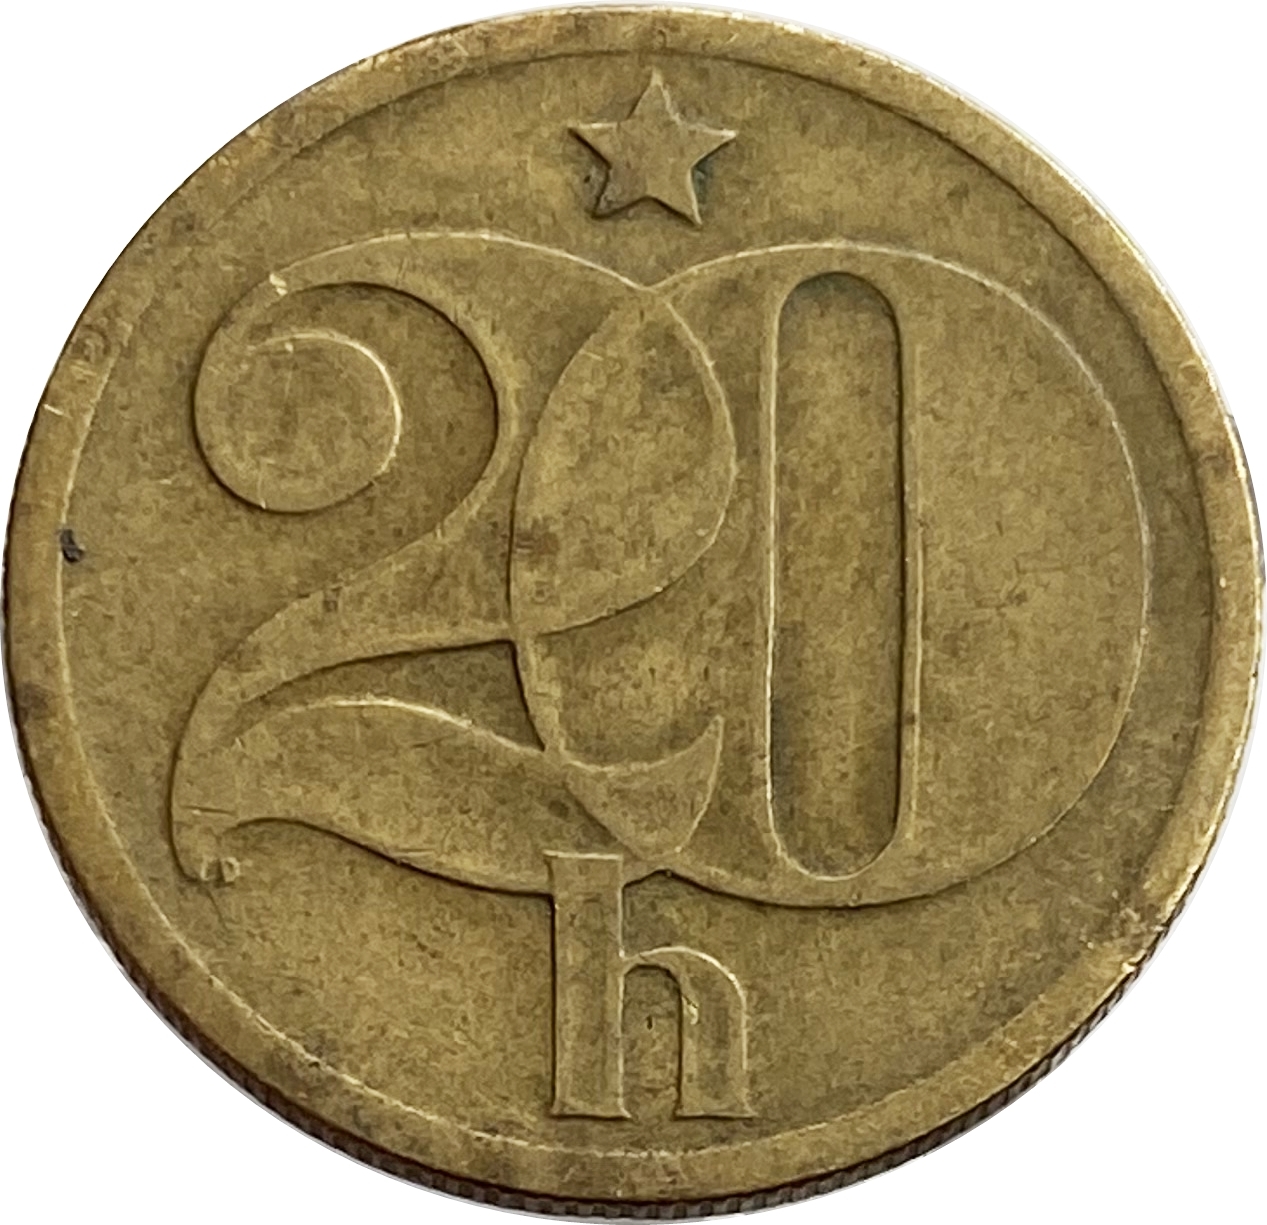 Чехословакия 20. Монета 20 cercs. Монеты Чехословакии. Монета Чехословакии 1927. Манетка ХХ лет.